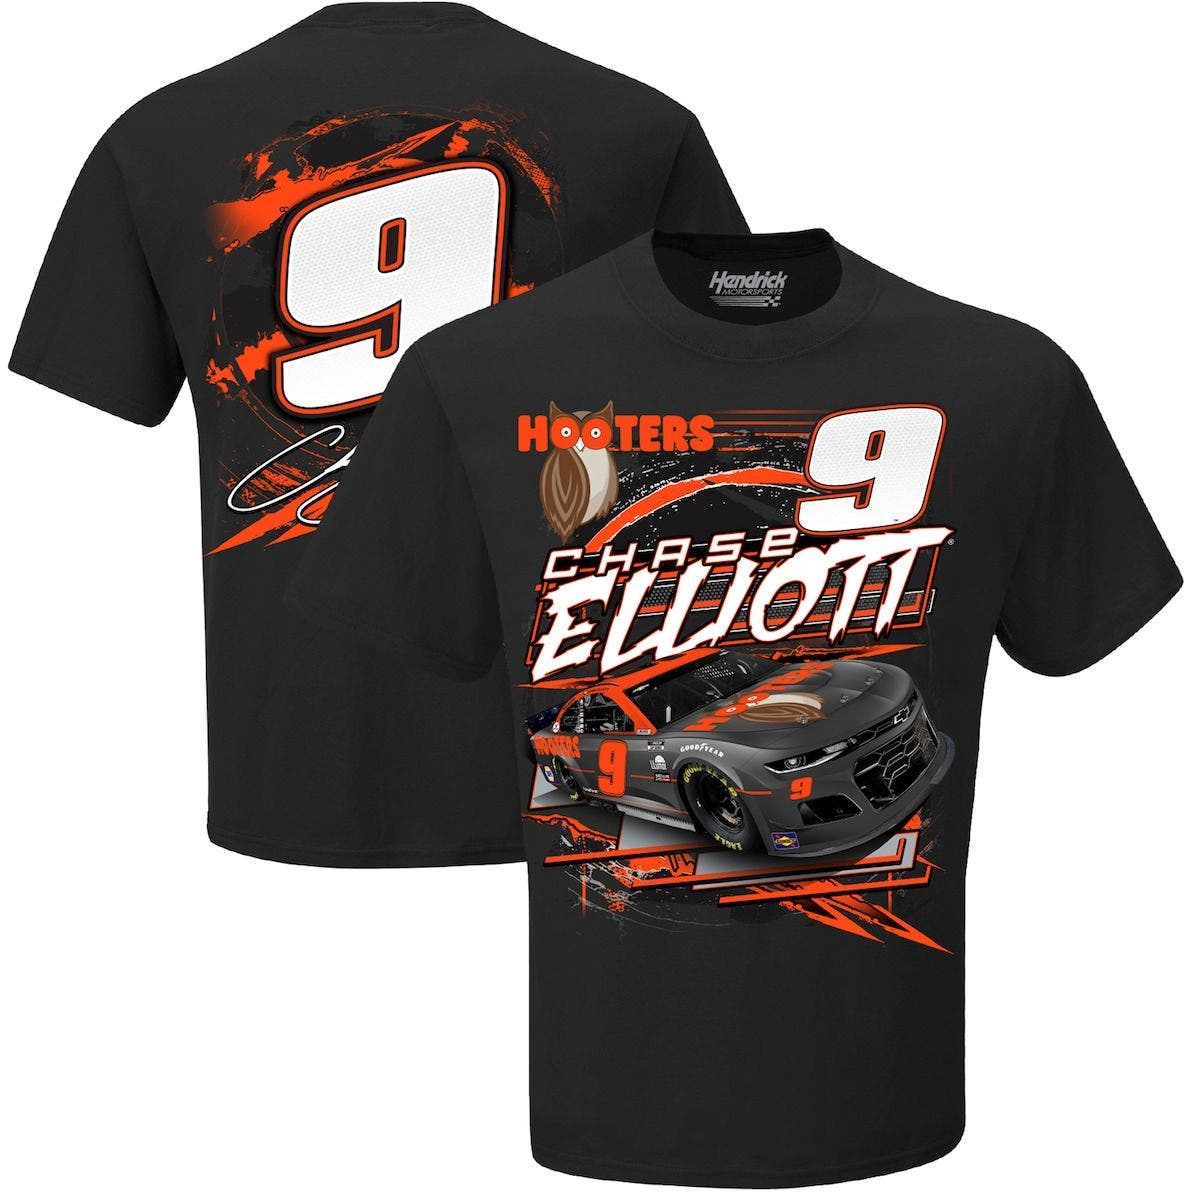 HENDRICK MOTORSPORTS TEAM COLLECTION Men's Hendrick Motorsports Team Collection Black Chase Elliott Slingshot Graphic T-Shirt at Nordstrom